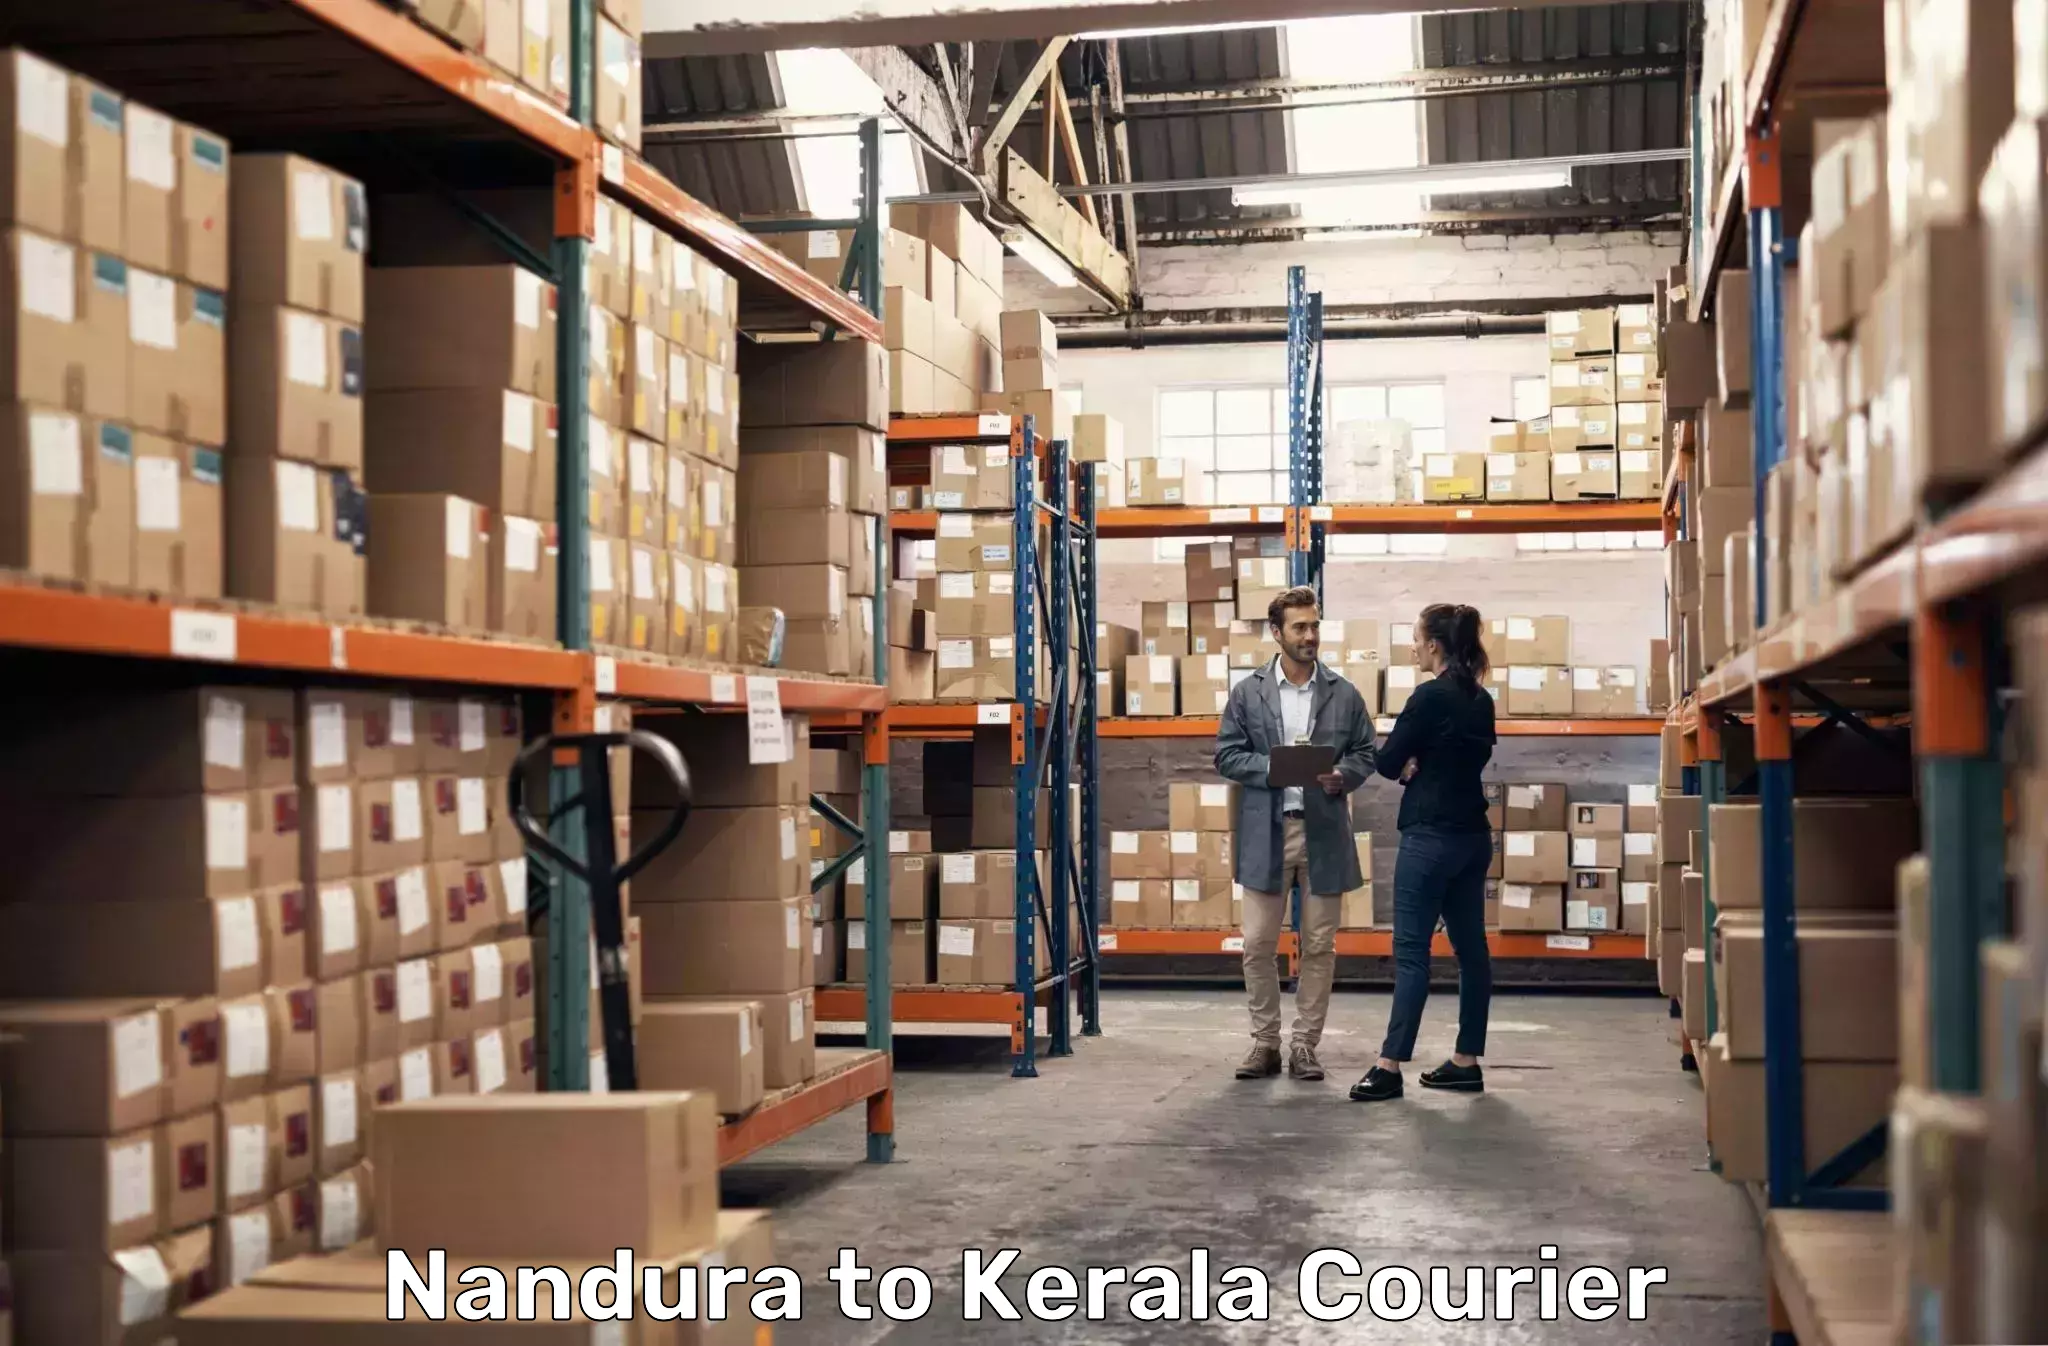 Express delivery capabilities Nandura to Perambra